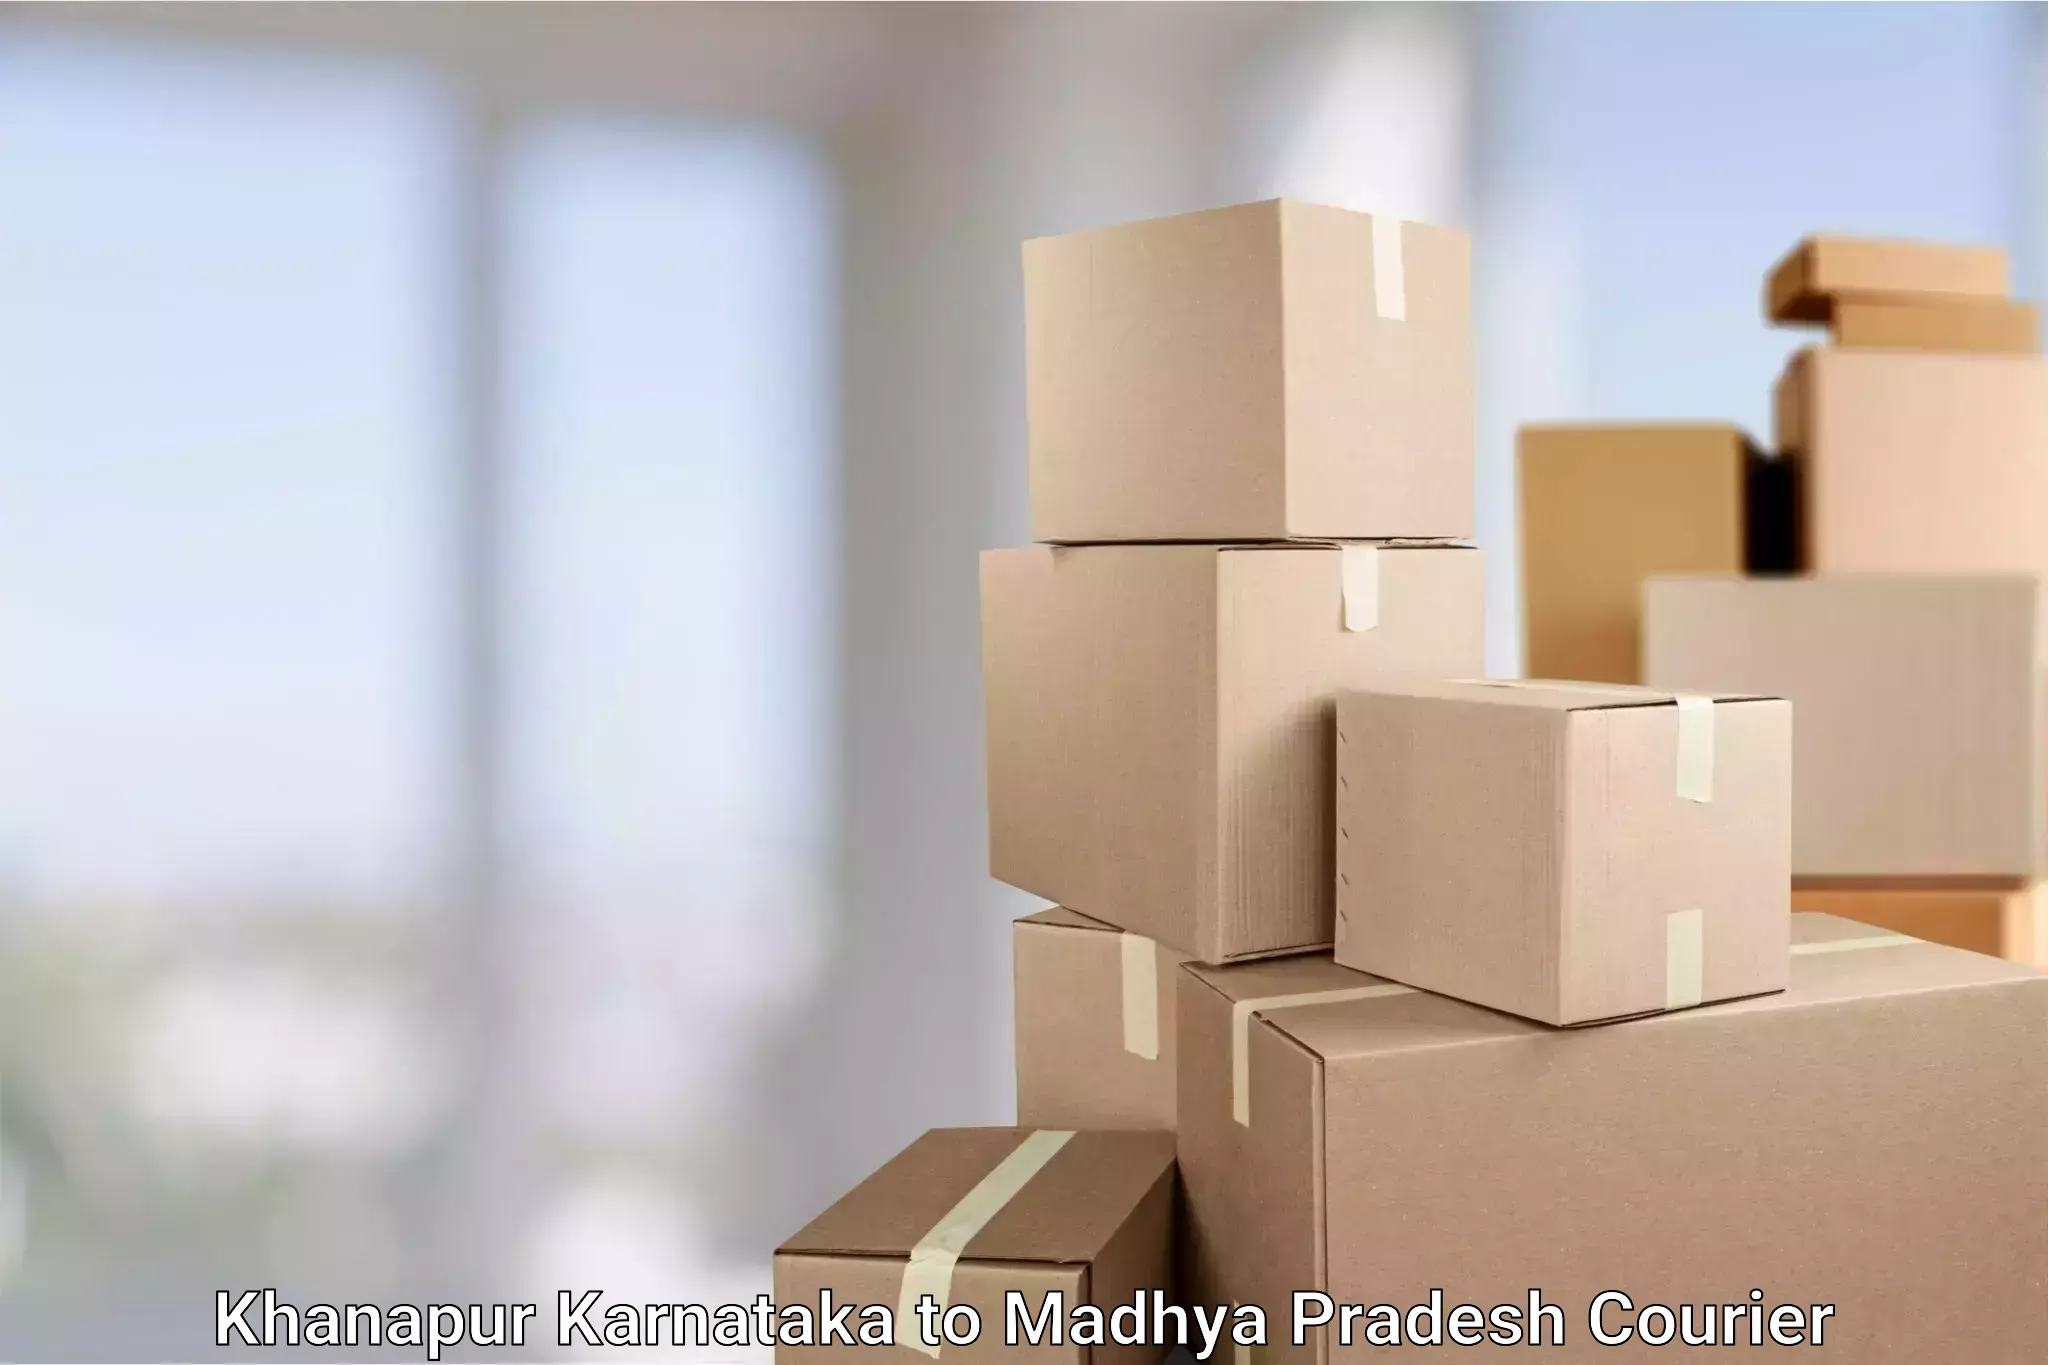 High-quality delivery services Khanapur Karnataka to Gwalior